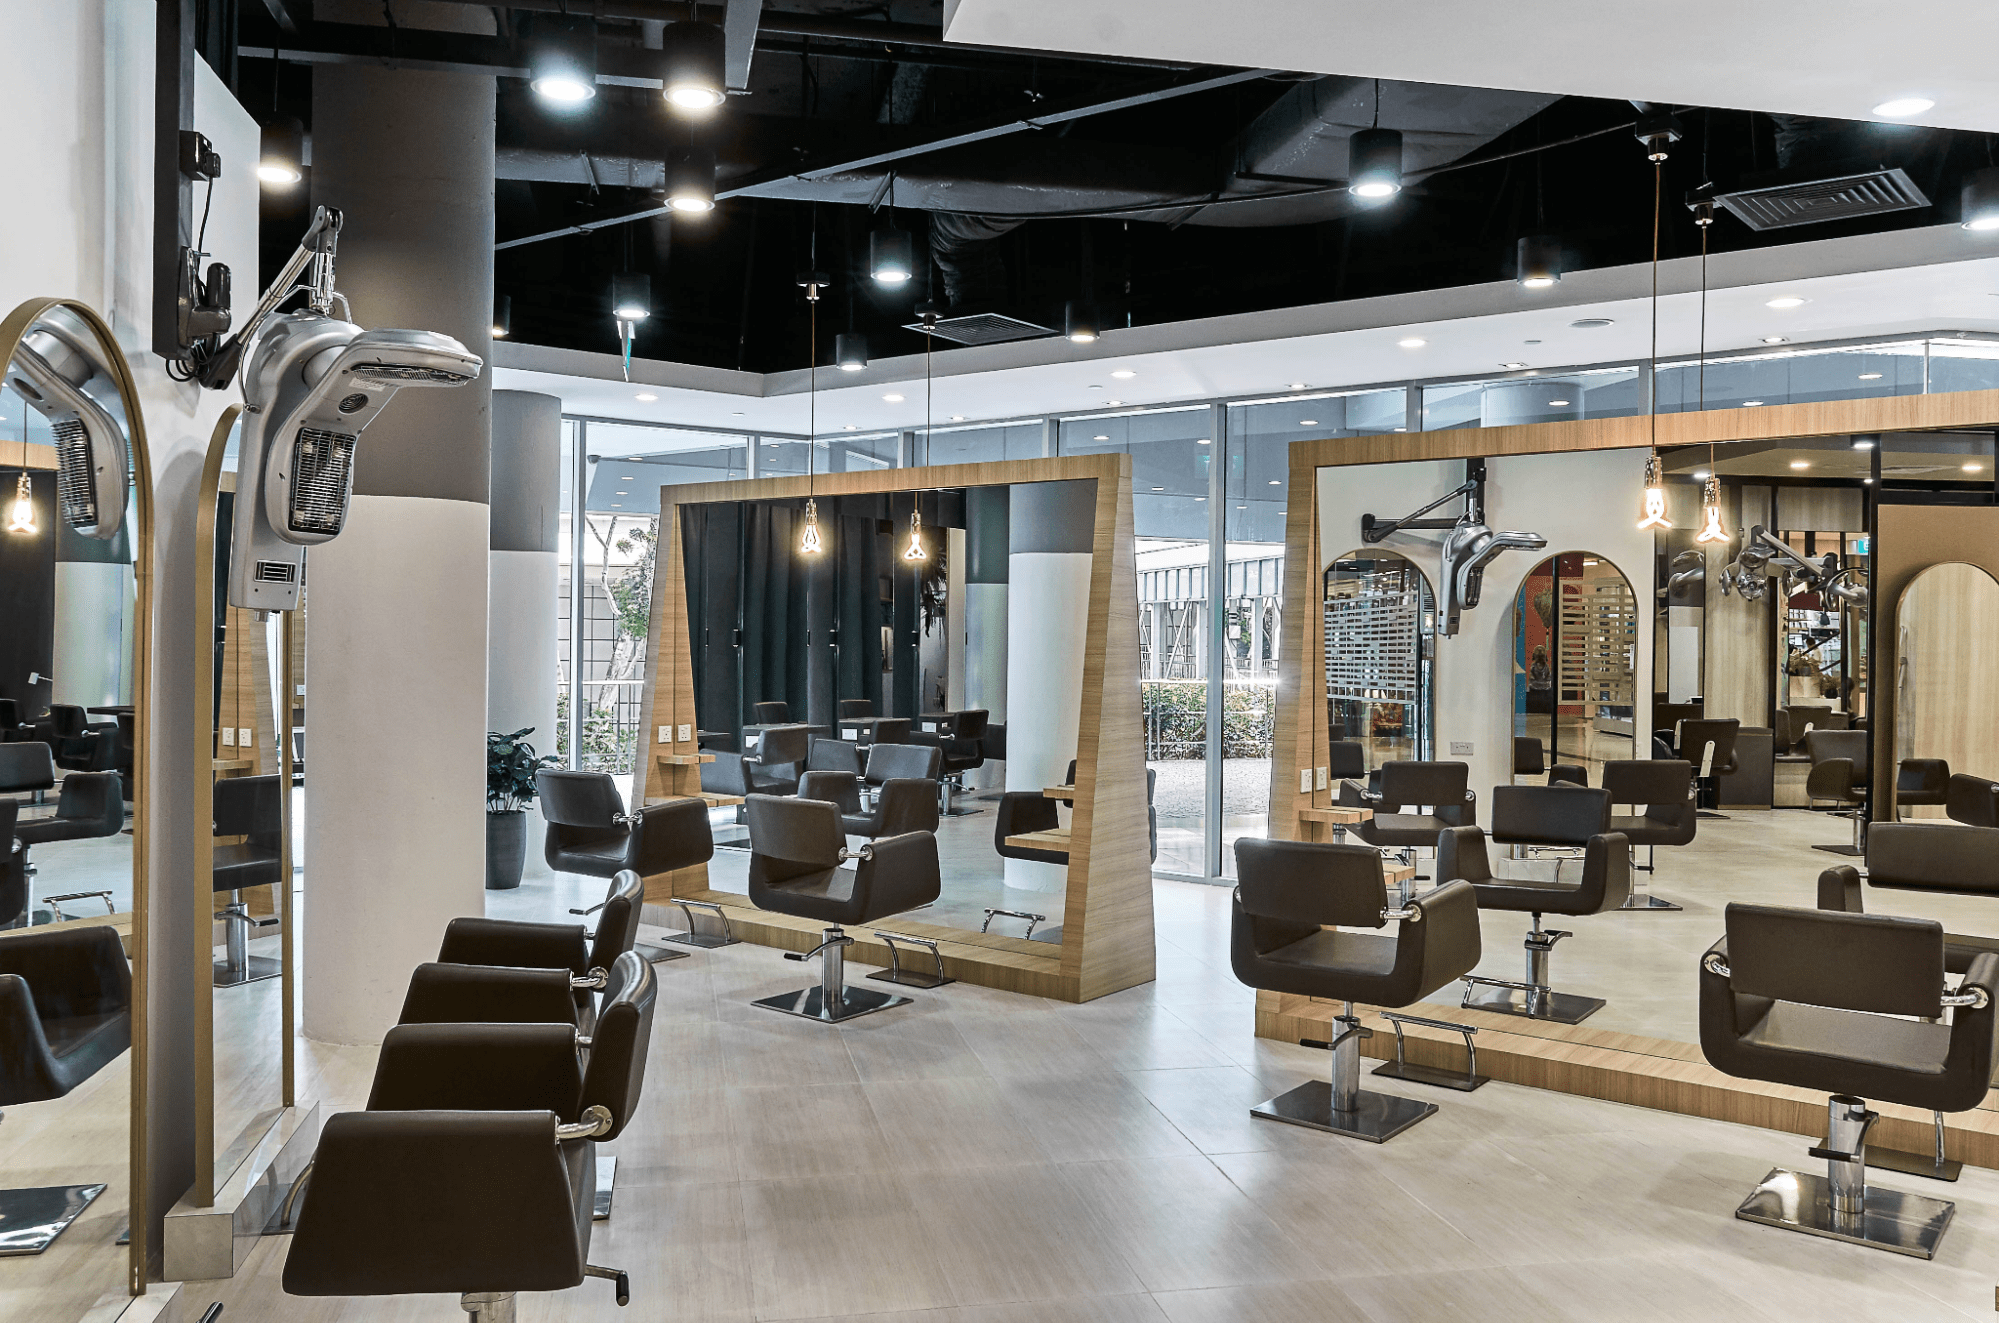 affordable hair salons singapore - Kimage - interior